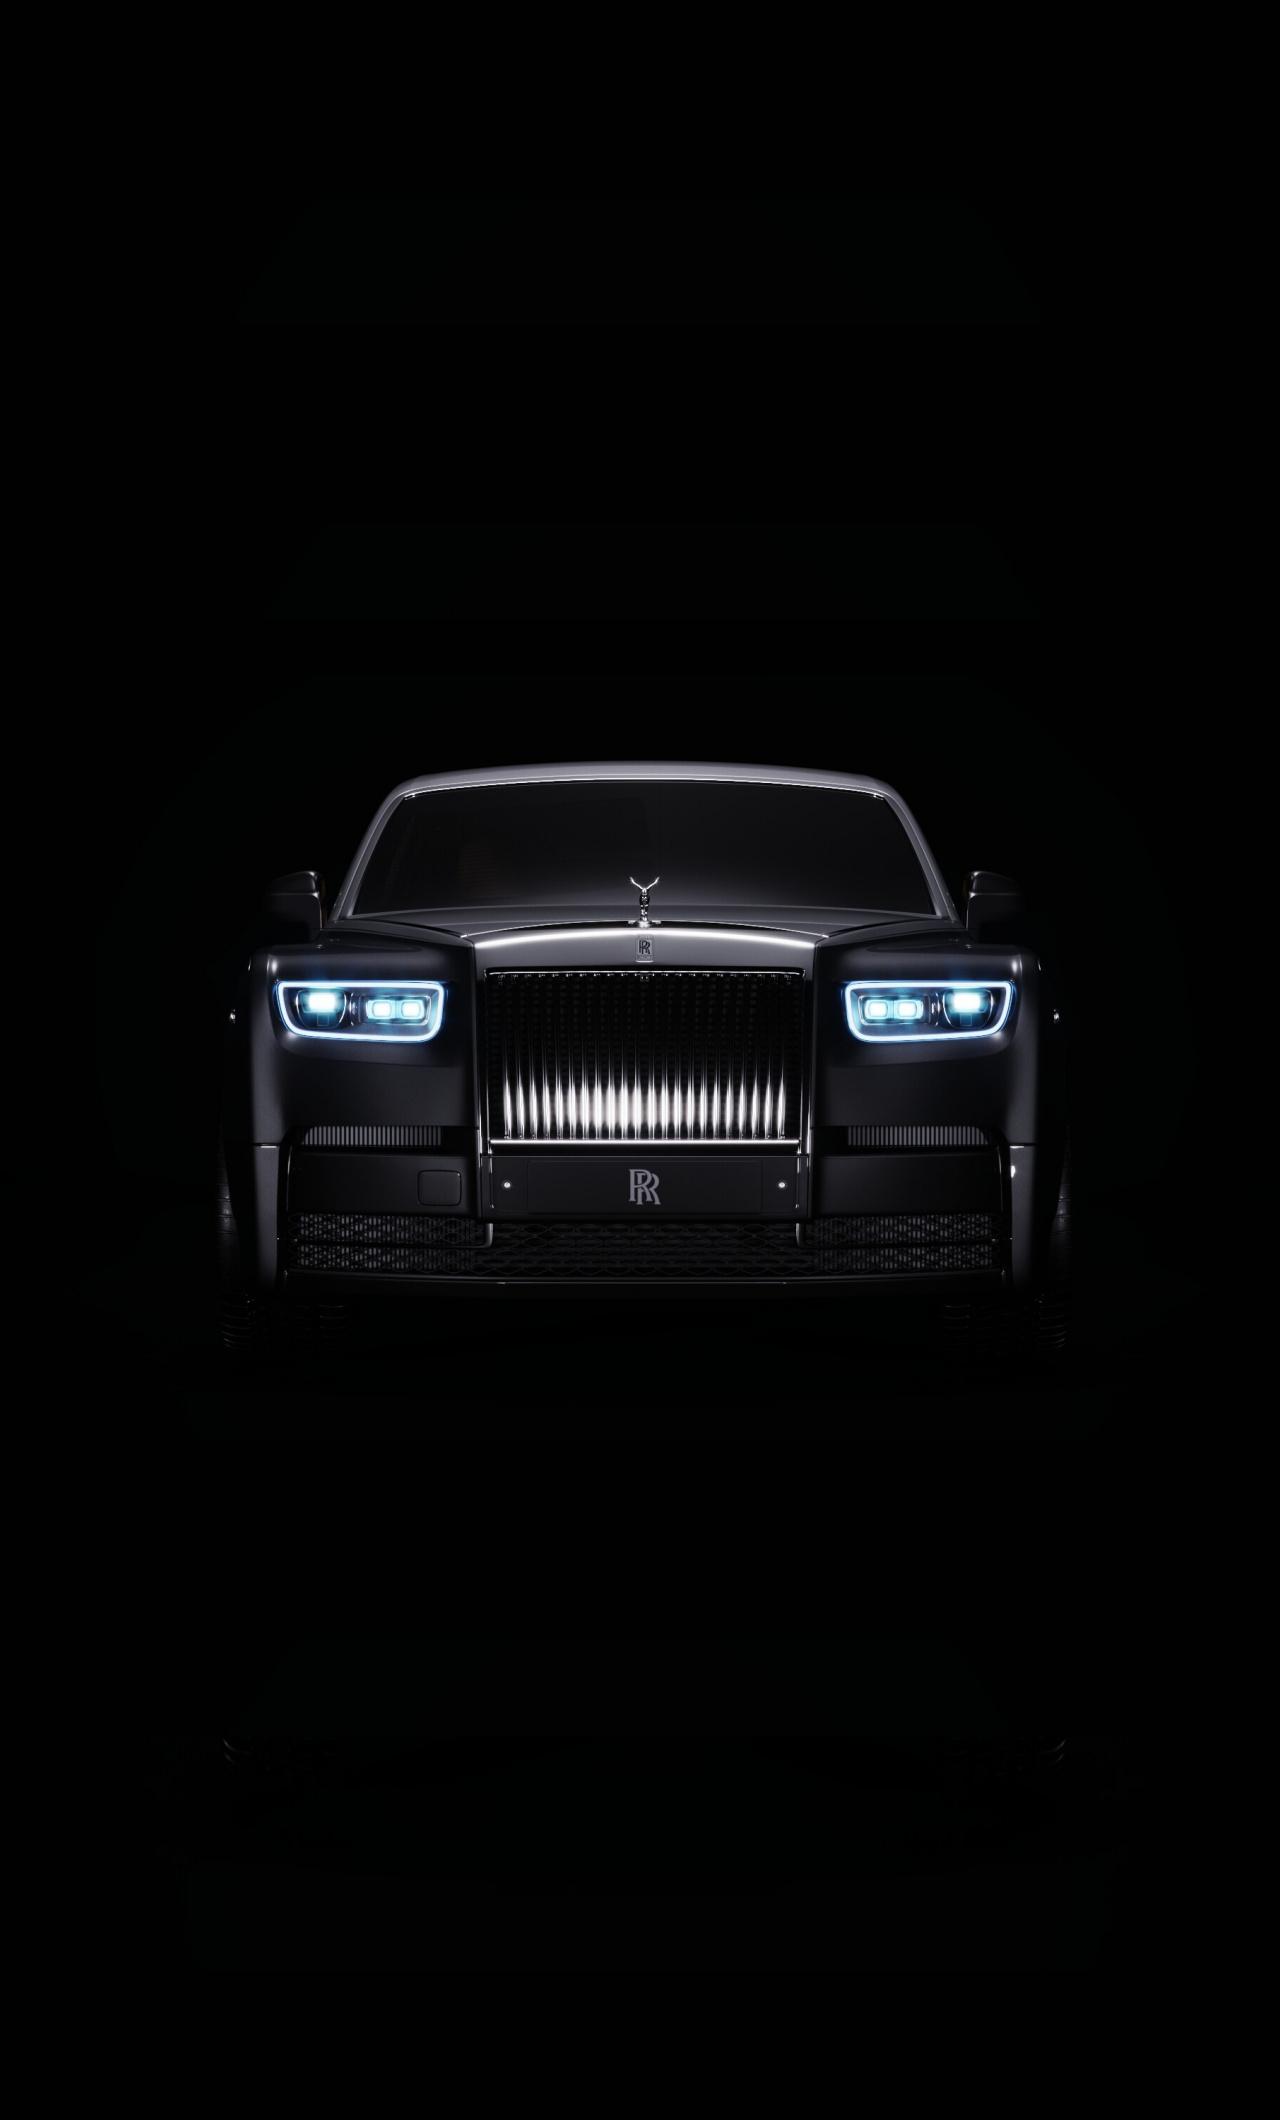 Rolls Royce Car 4k iPhone 2020 Wallpapers - Wallpaper Cave